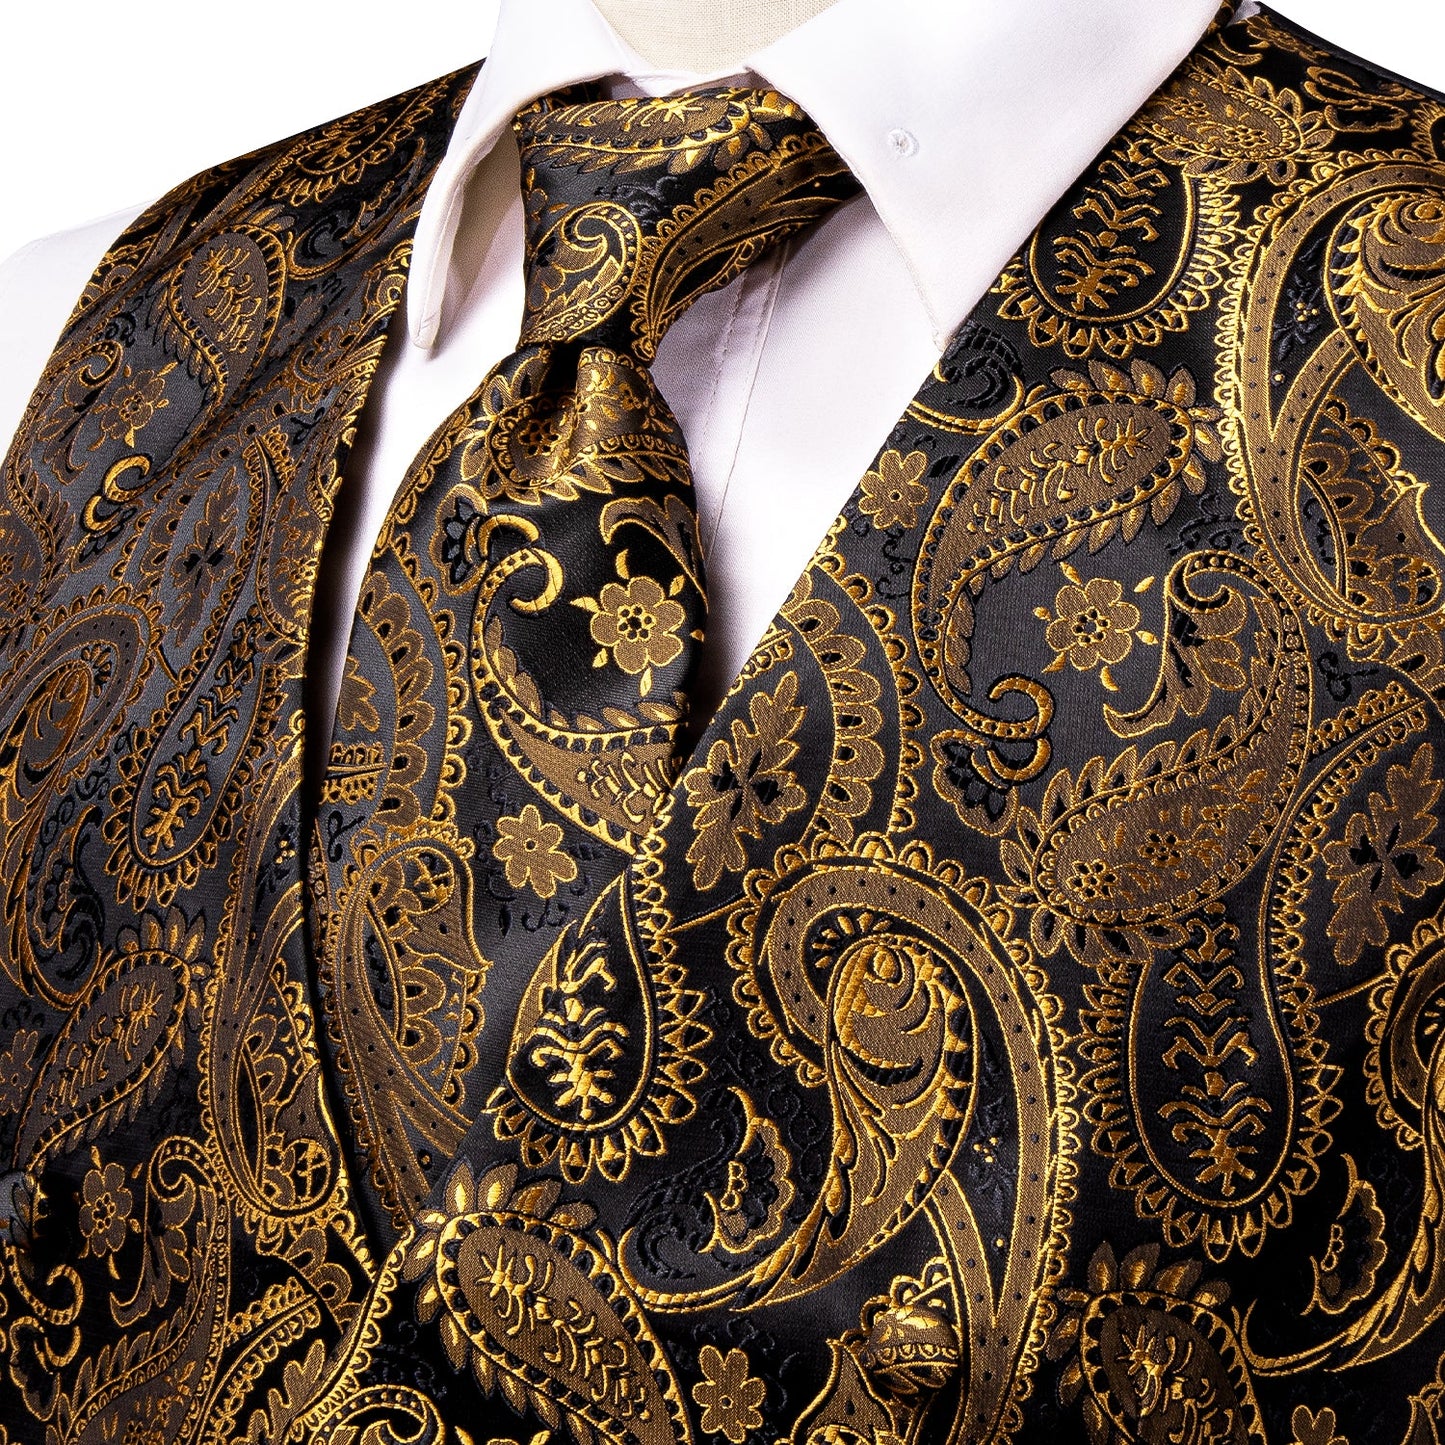 Victorian Waistcoat Novelty Vintage Silky Vest Asymmetric Bronze